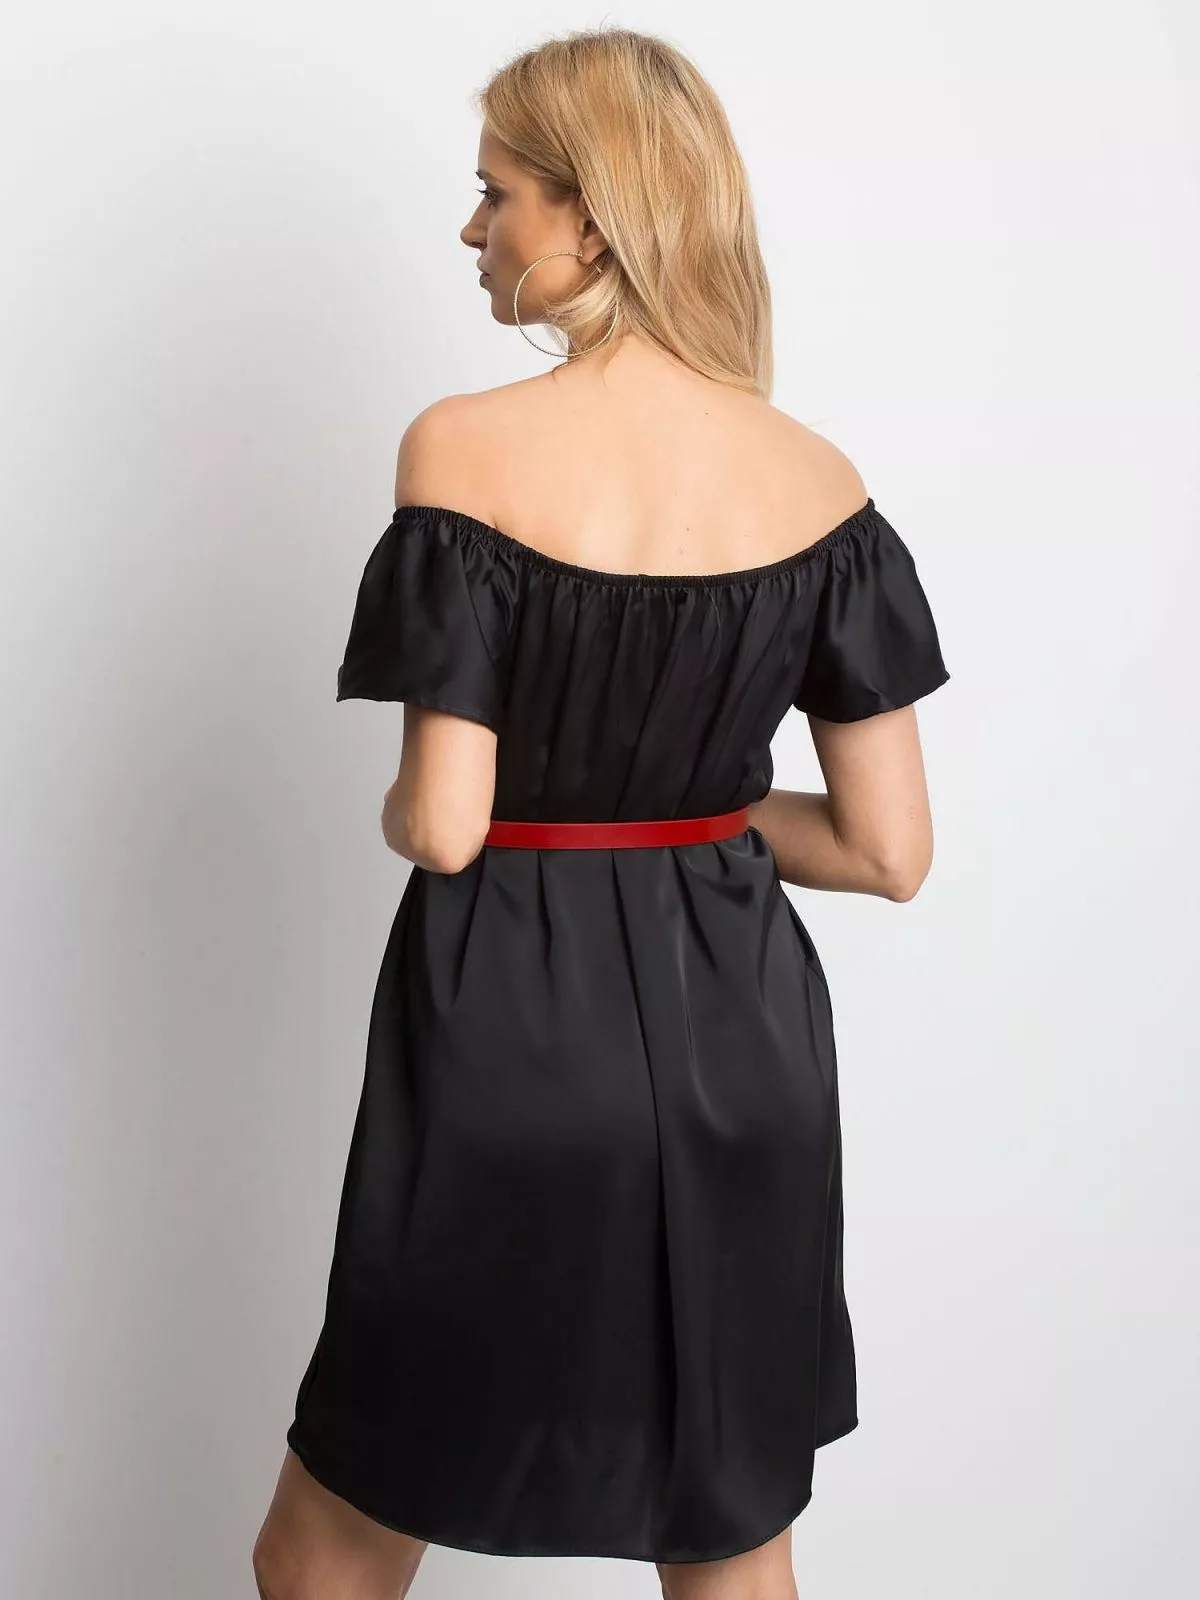 Rochie de zi stil spaniol negru - rochii de zi